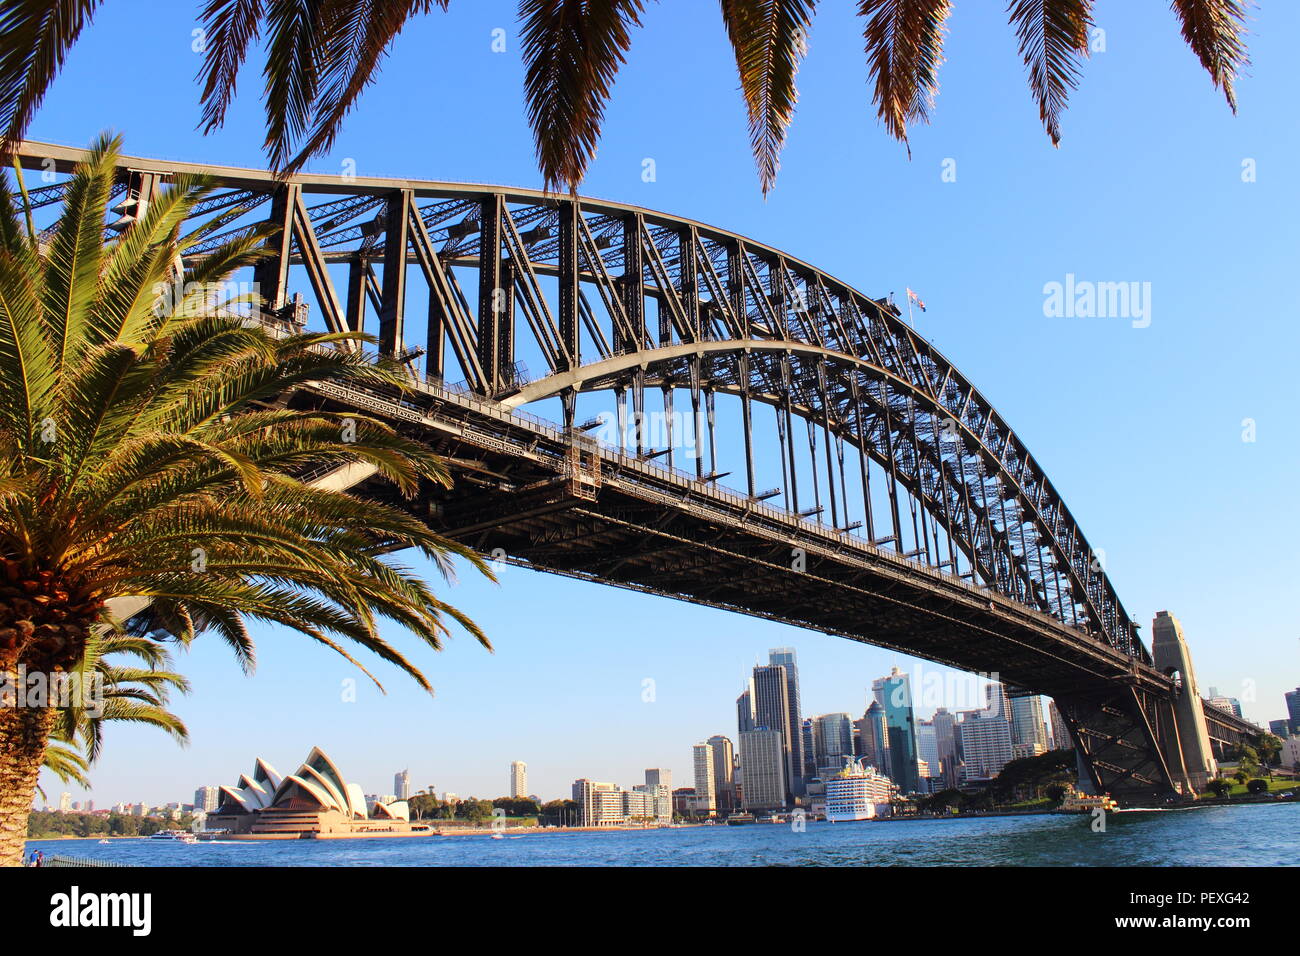 Sydney Harbour bei Sonnenuntergang - Opernhaus Sydney - Harbour Bridge Sydney Stockfoto